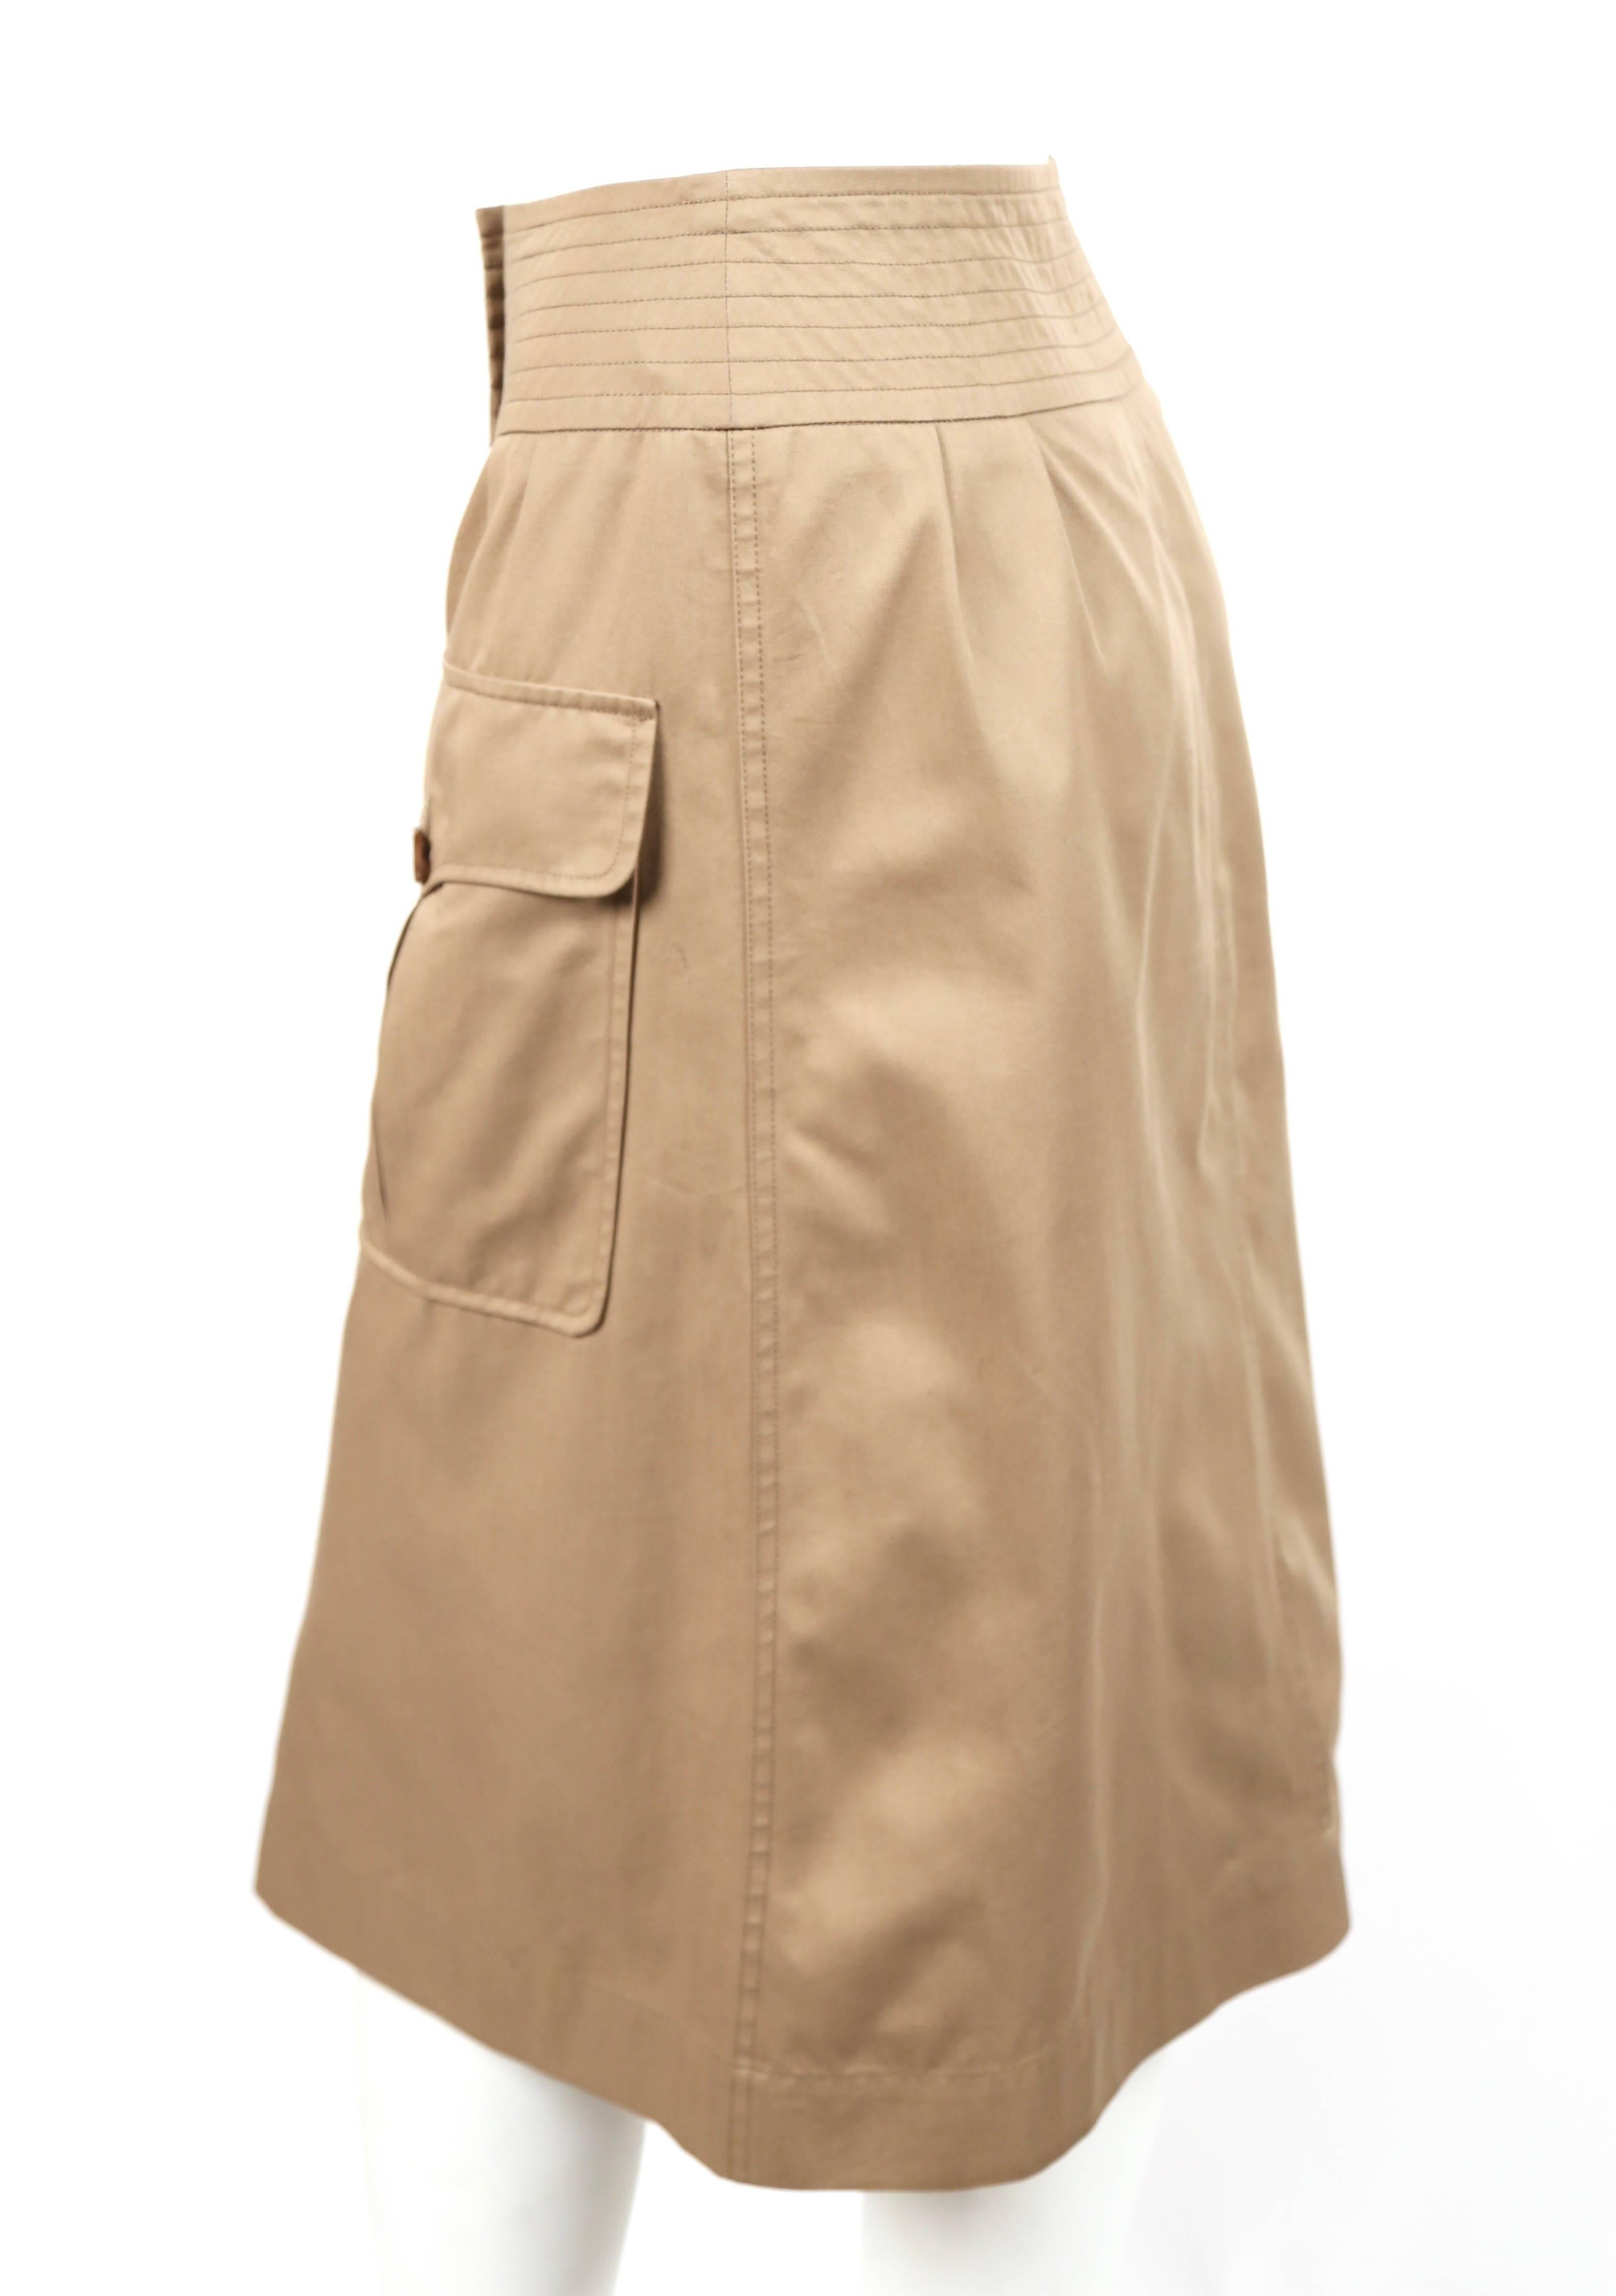 safari skirt long